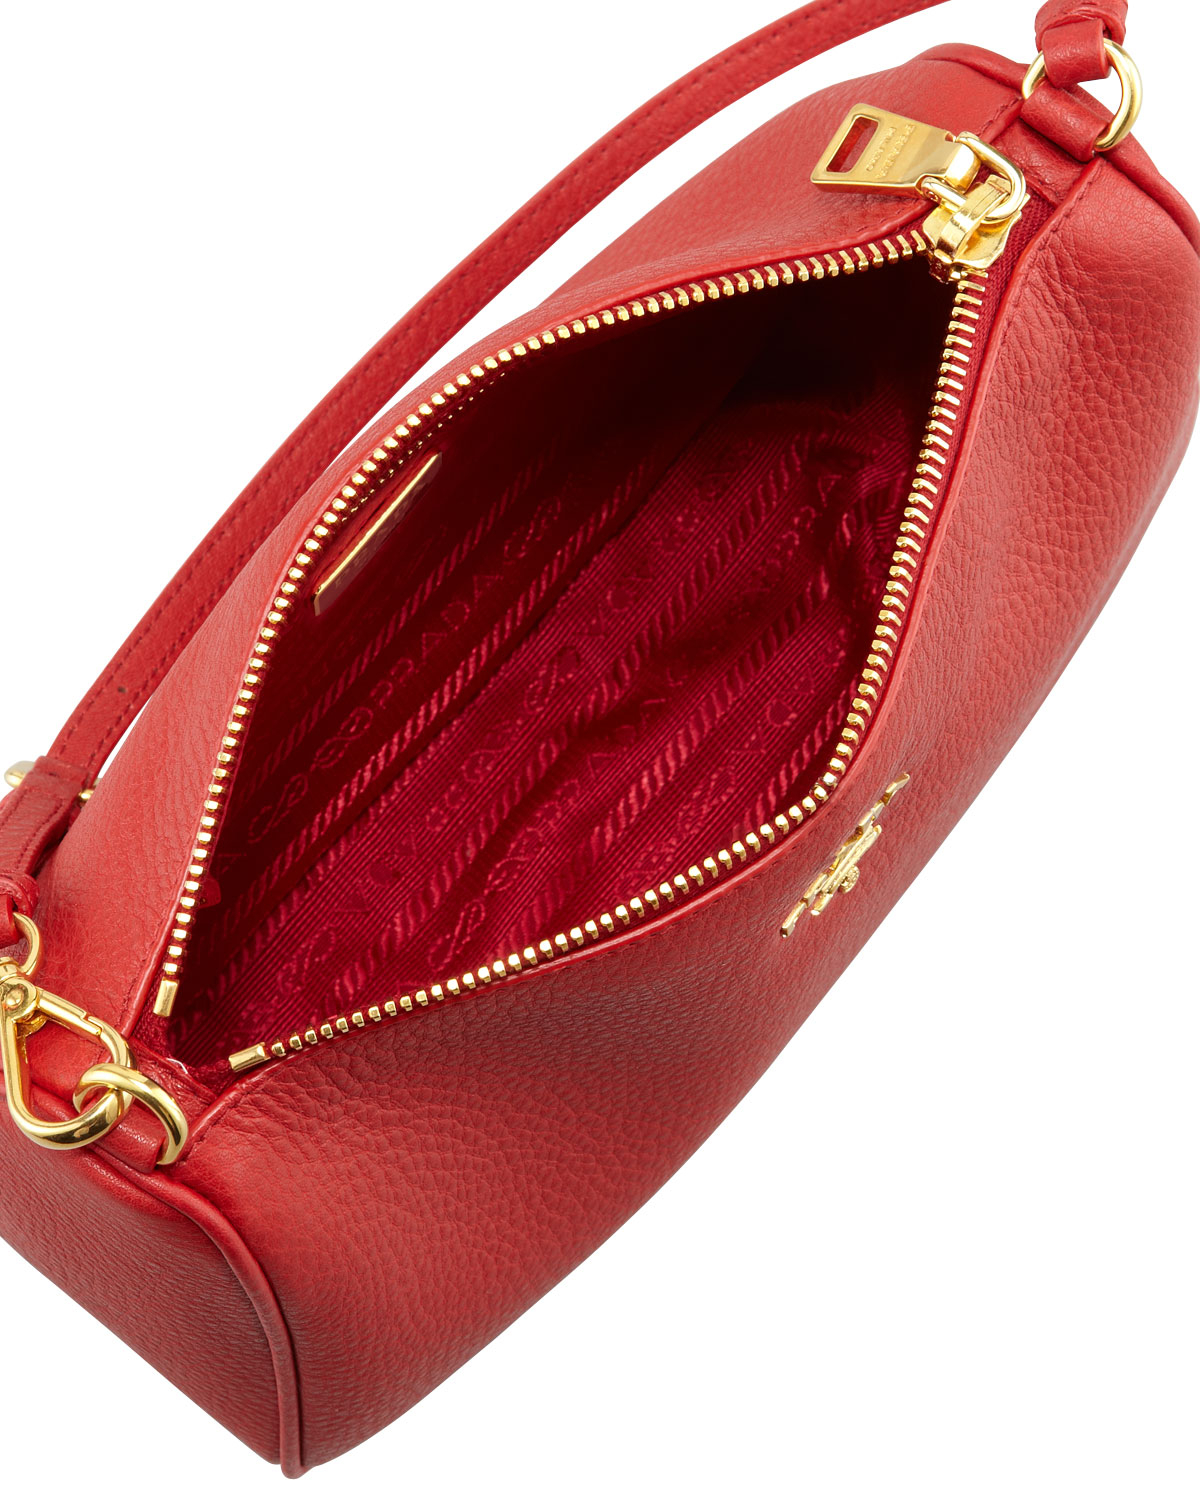 Lyst - Prada Daino Small Shoulder Bag in Red